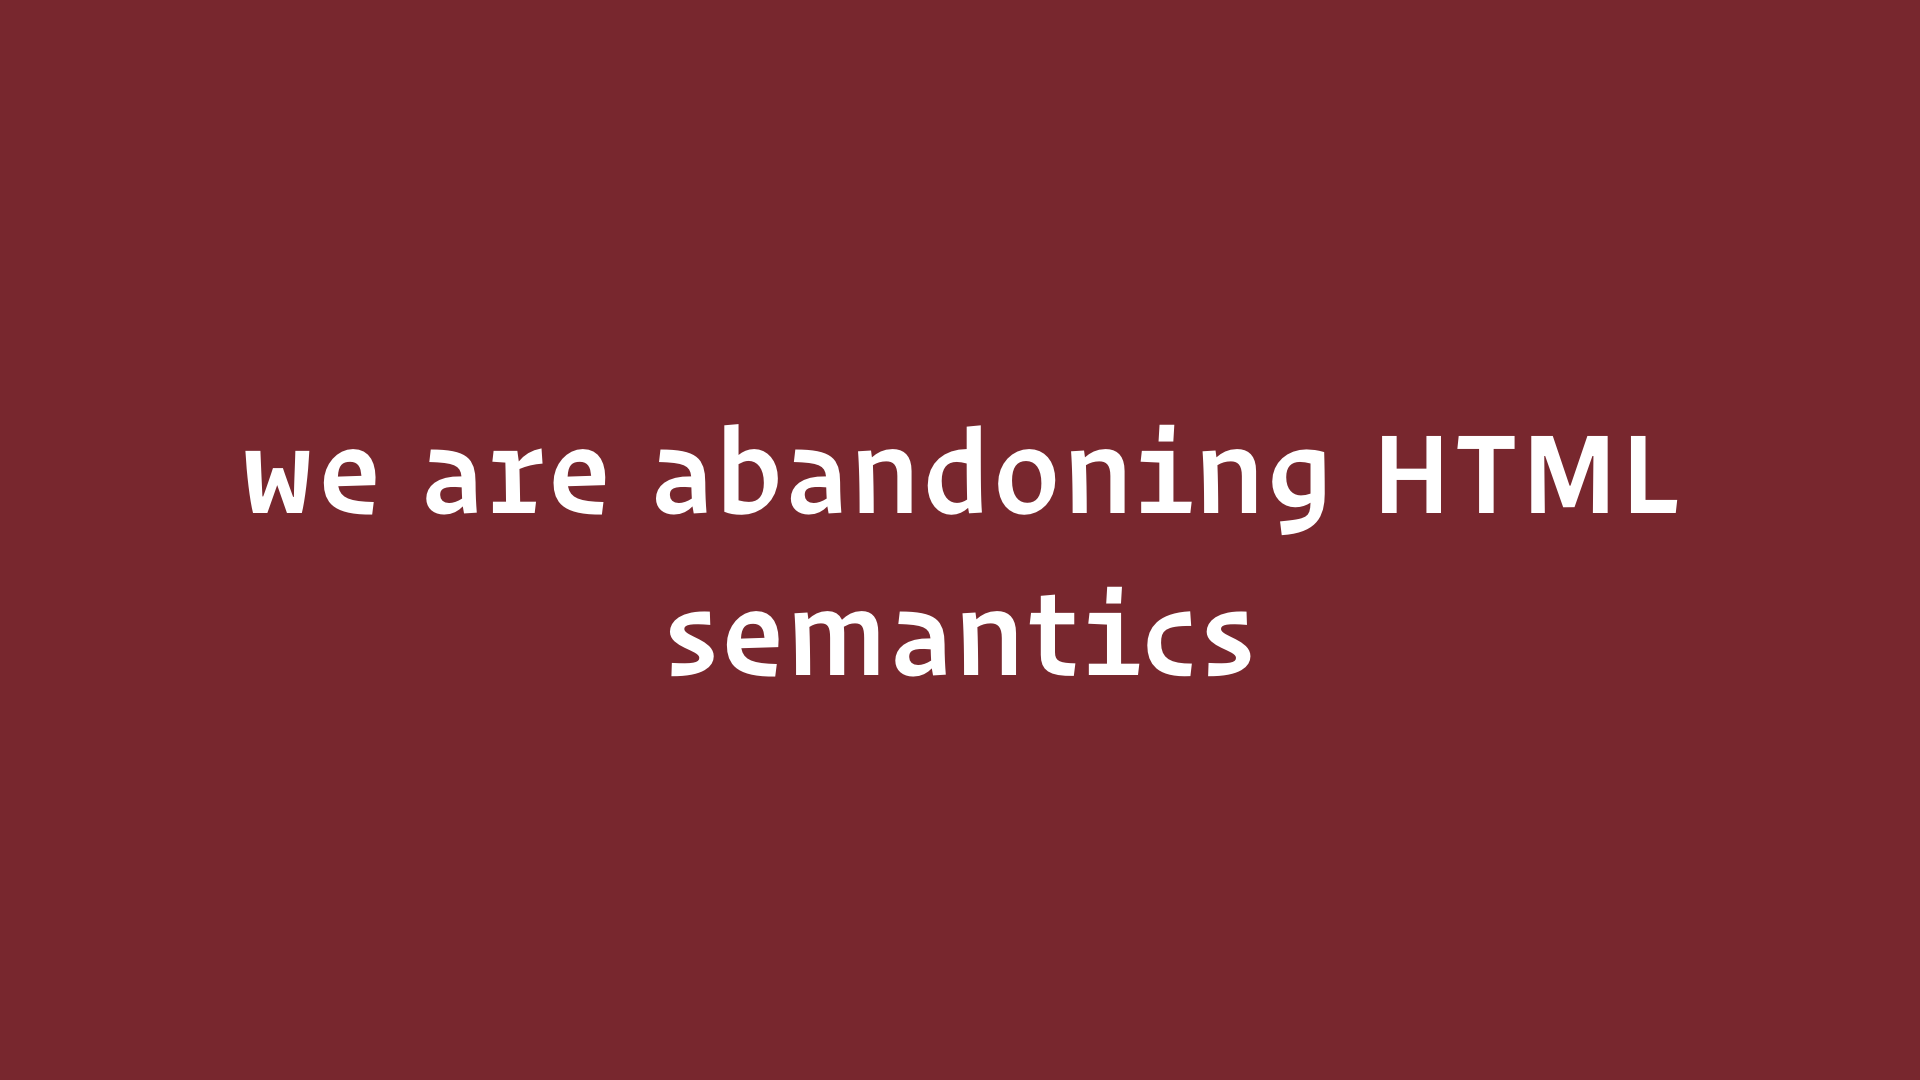 slide: We are abandoning HTML semantics